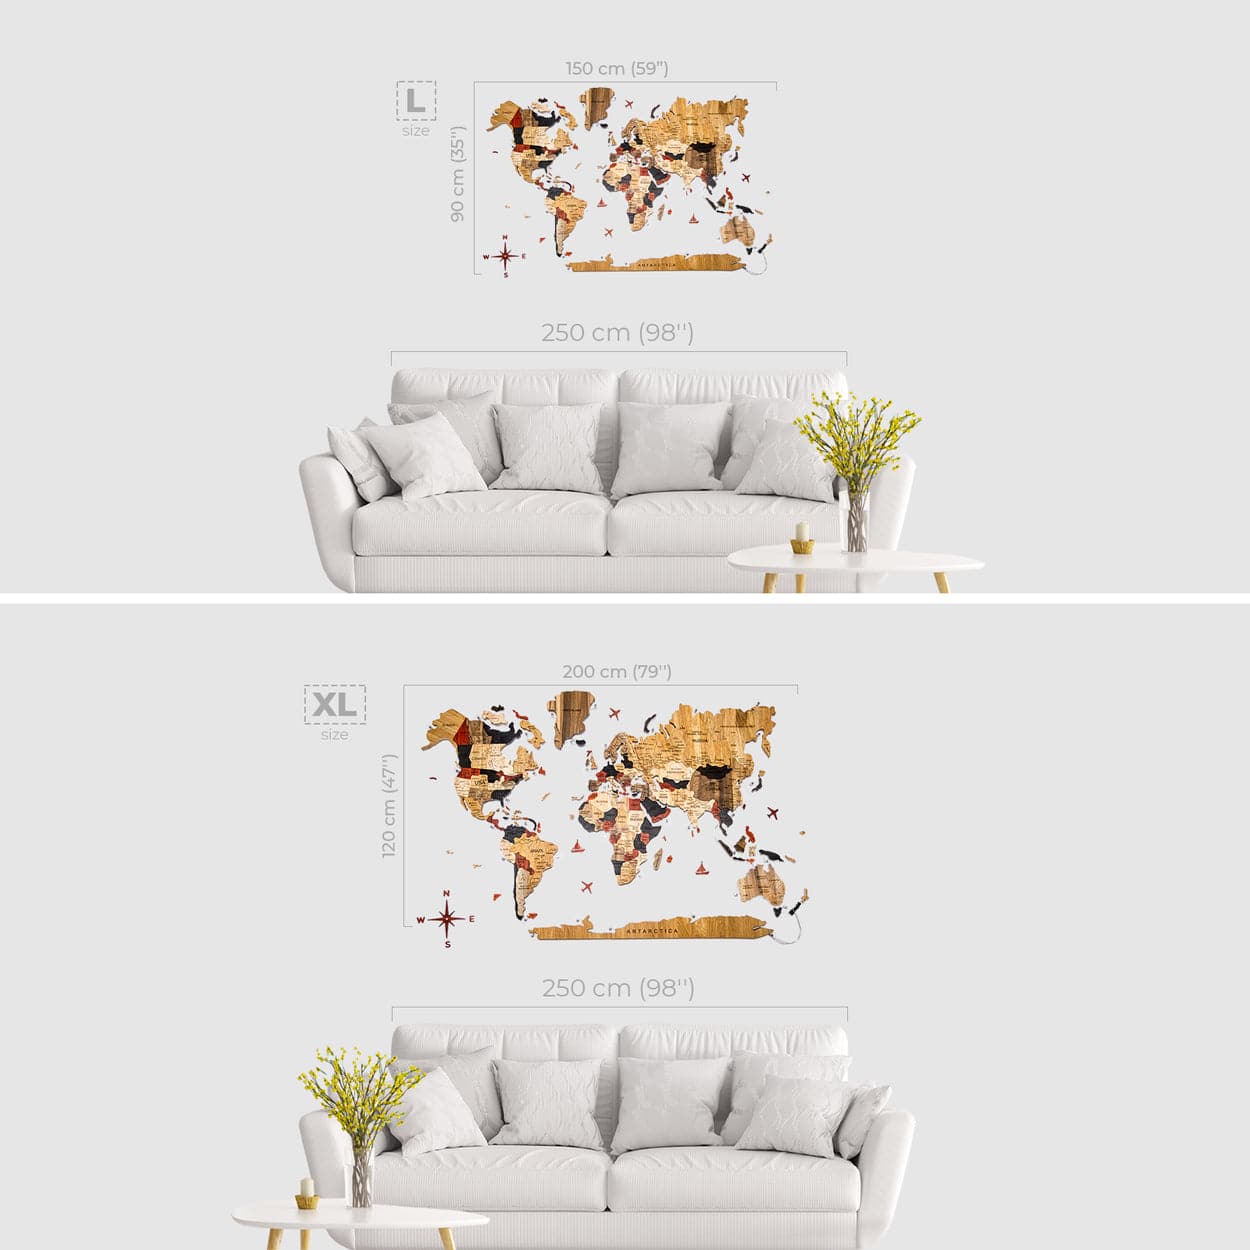 Modern Home Decor, 3D World Map, Living Room Decor, Wood Wall Art by Enjoy  The Wood